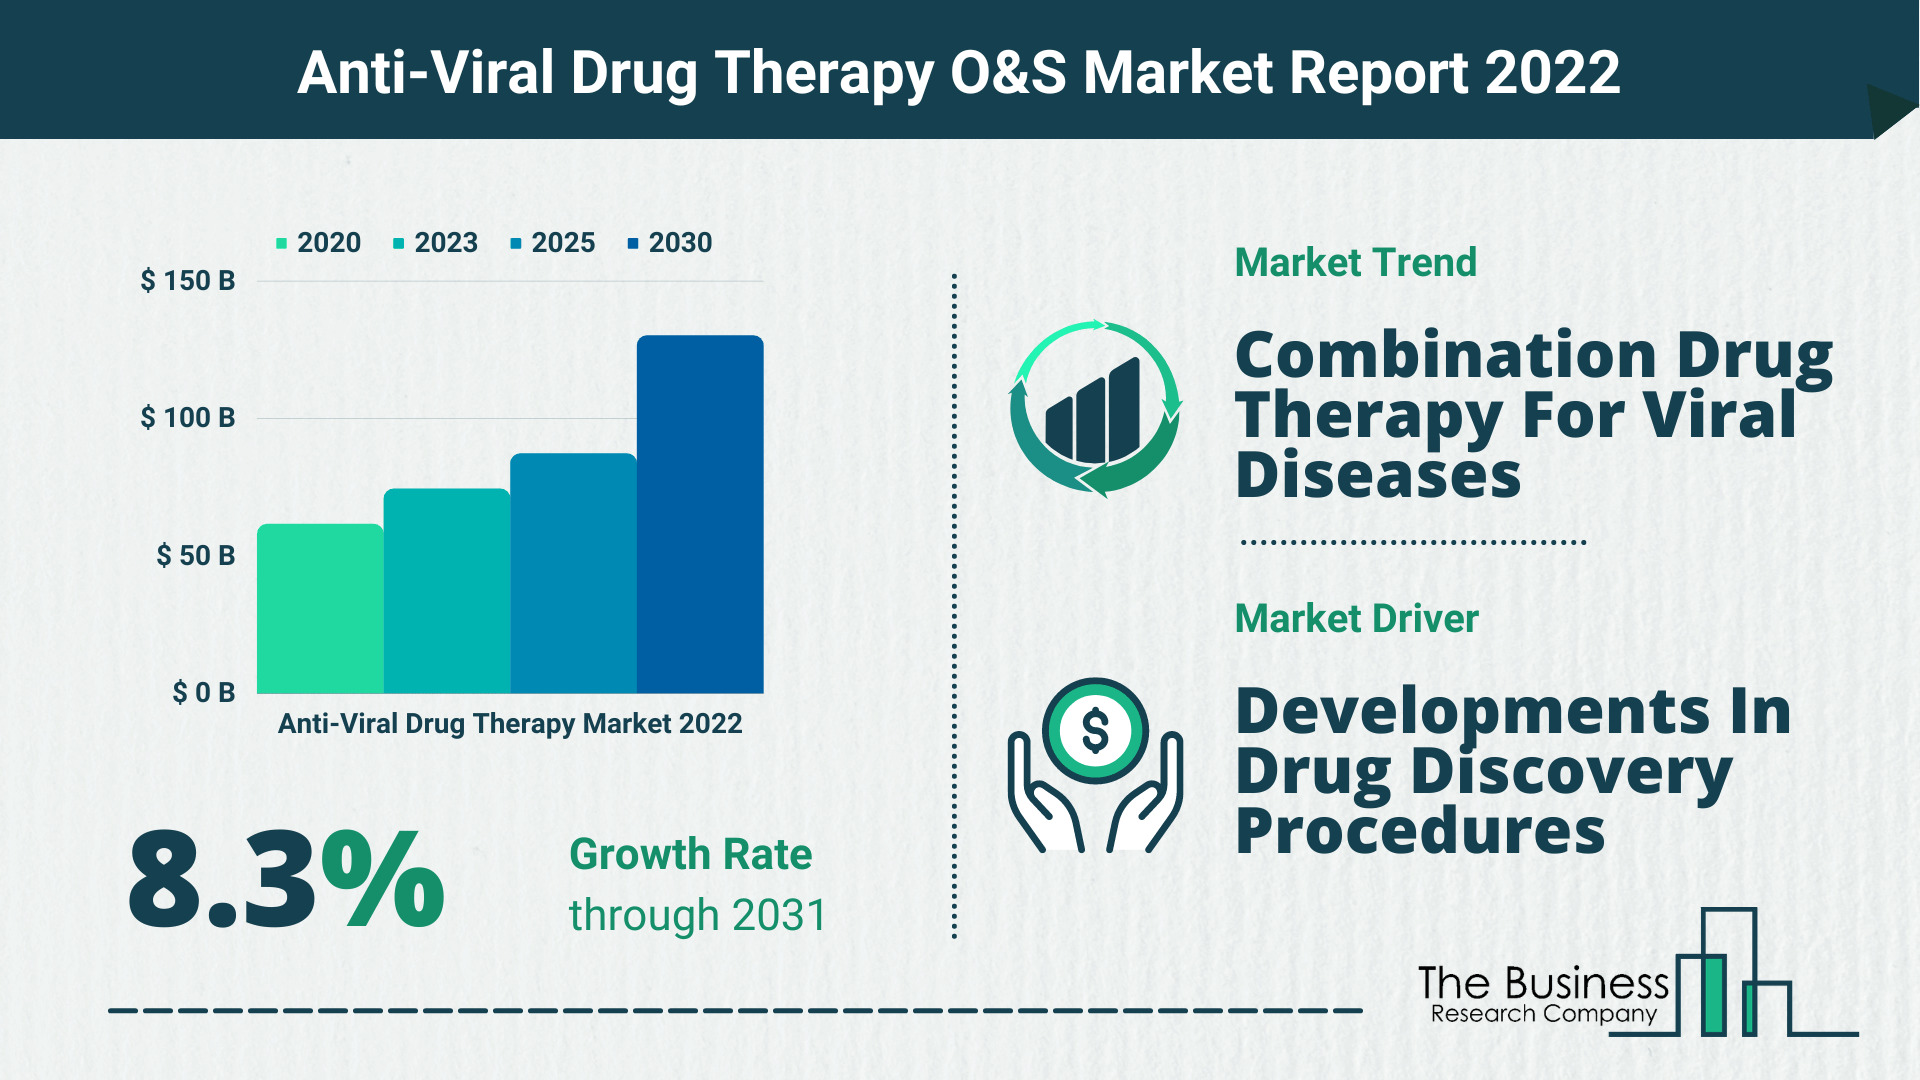 Global Anti-Viral Drug Therapy Market